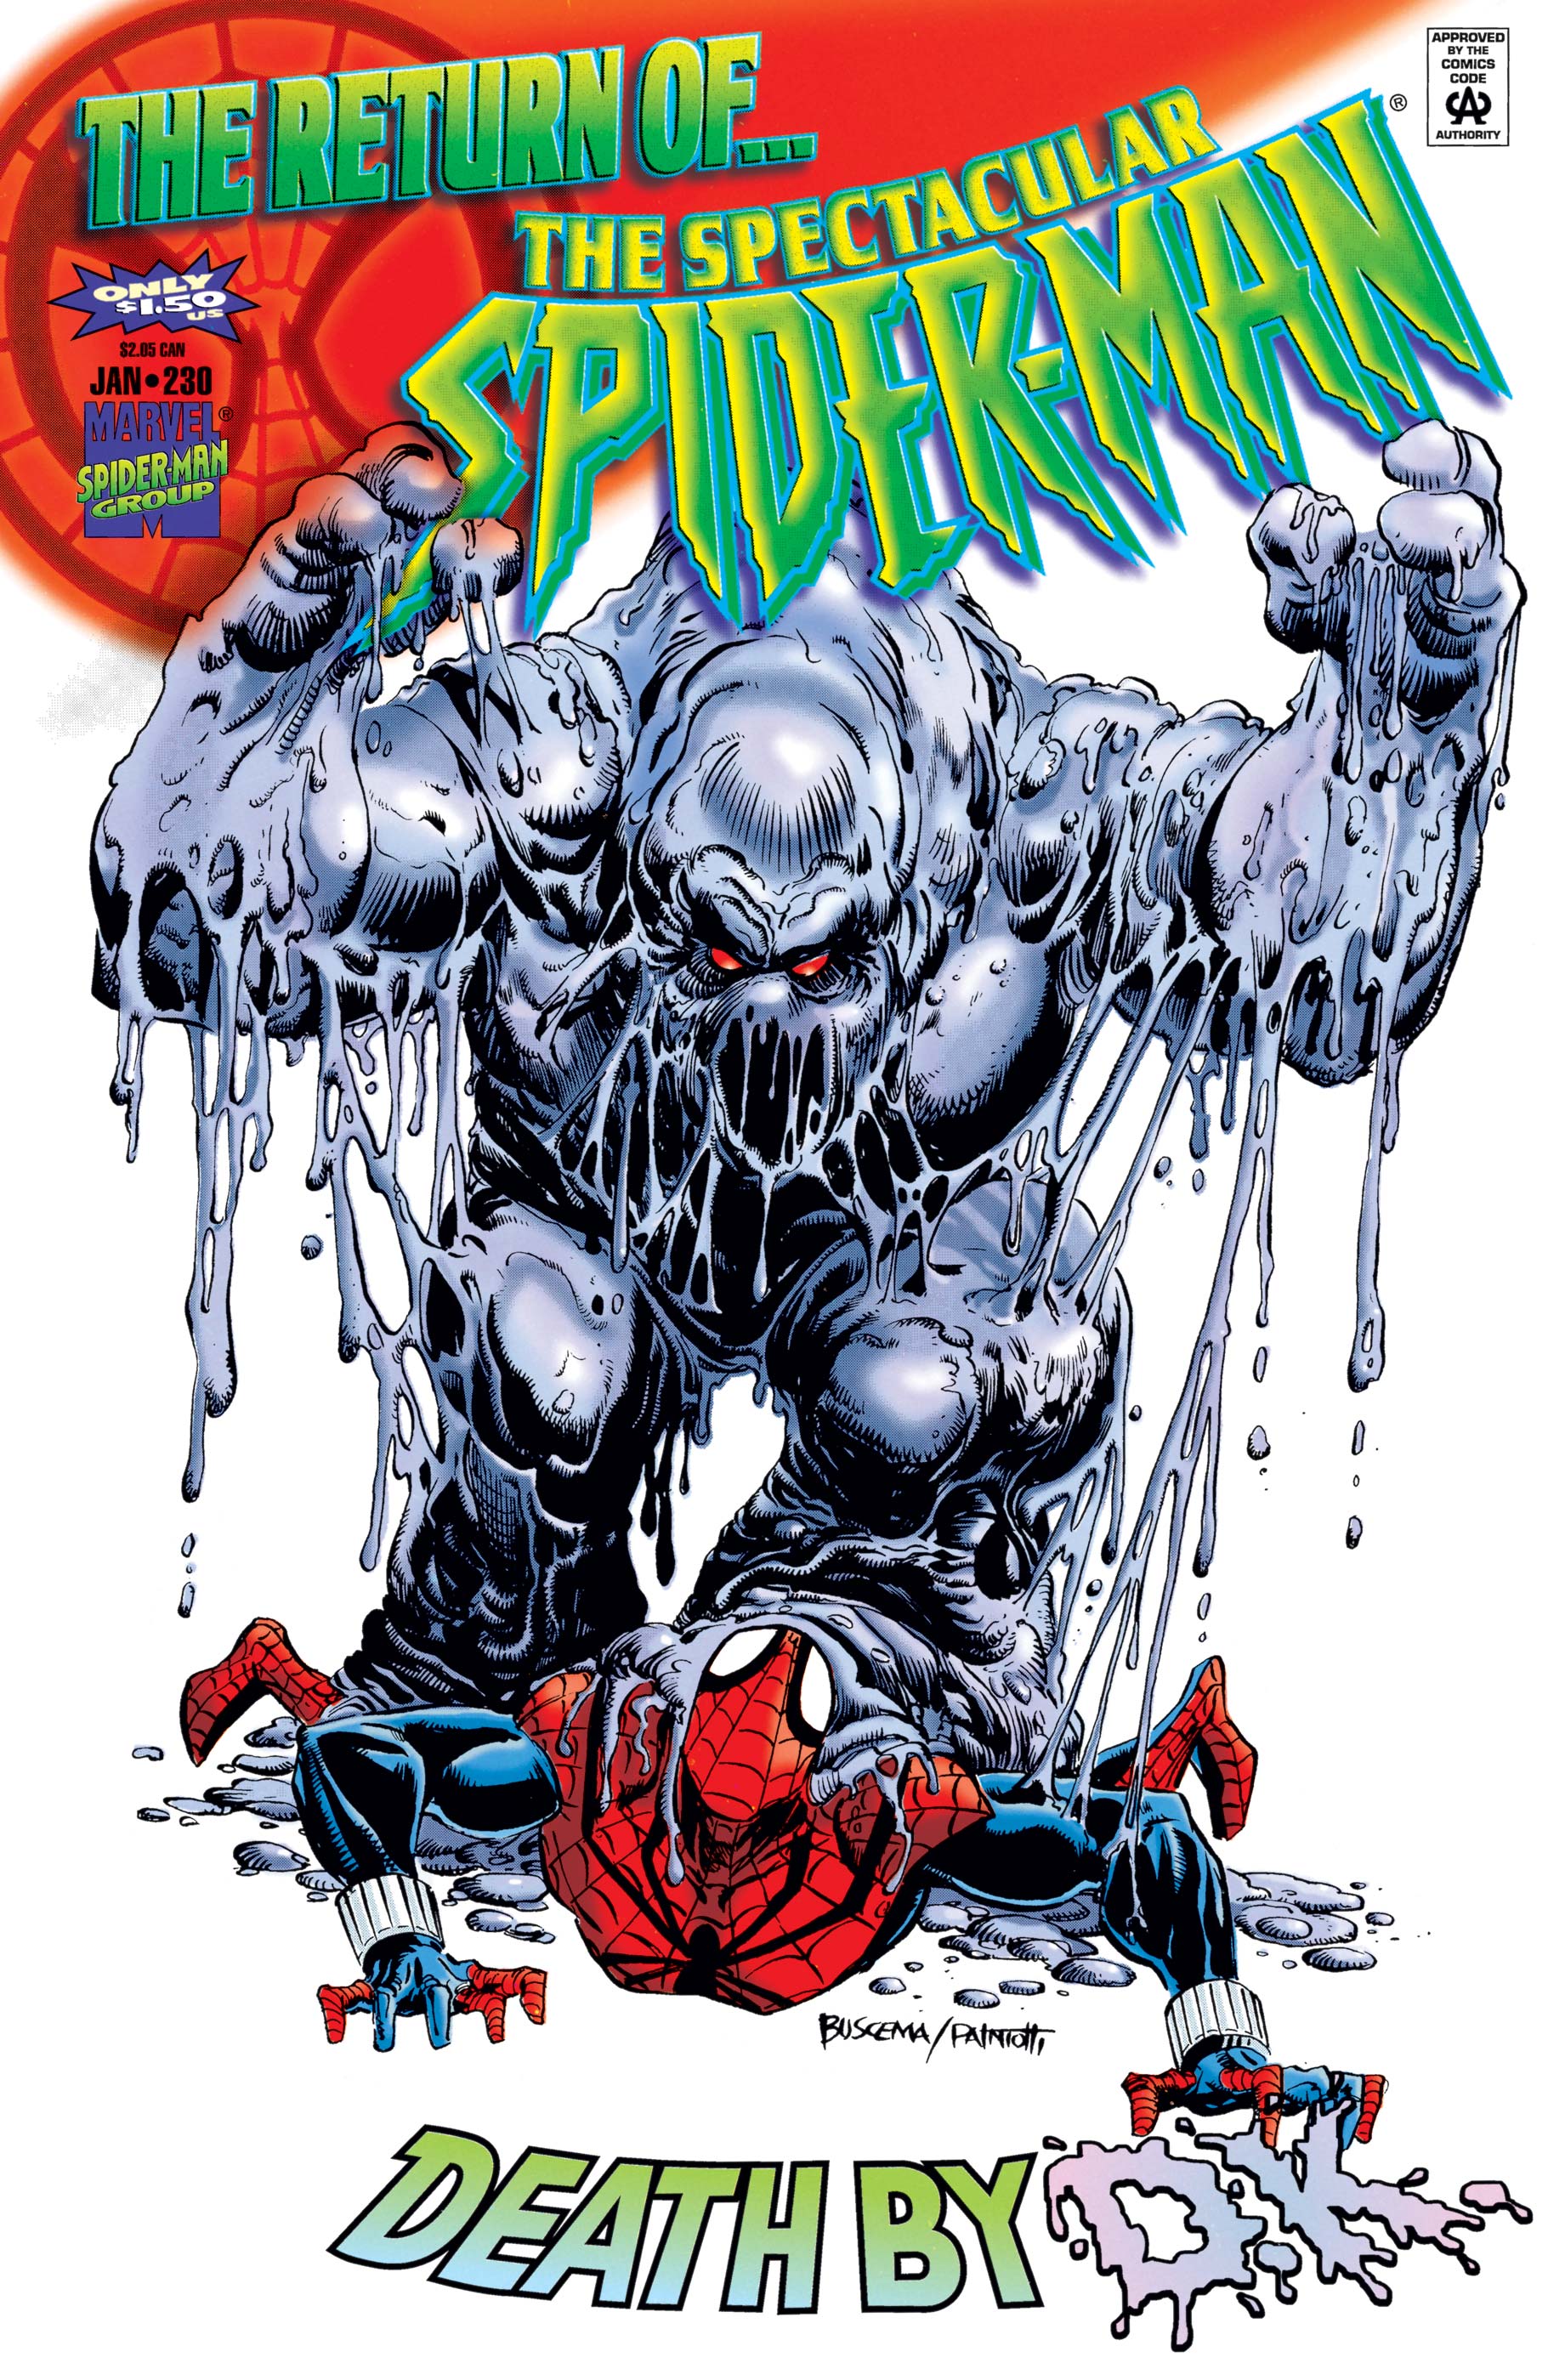 Peter Parker, the Spectacular Spider-Man (1976) #230